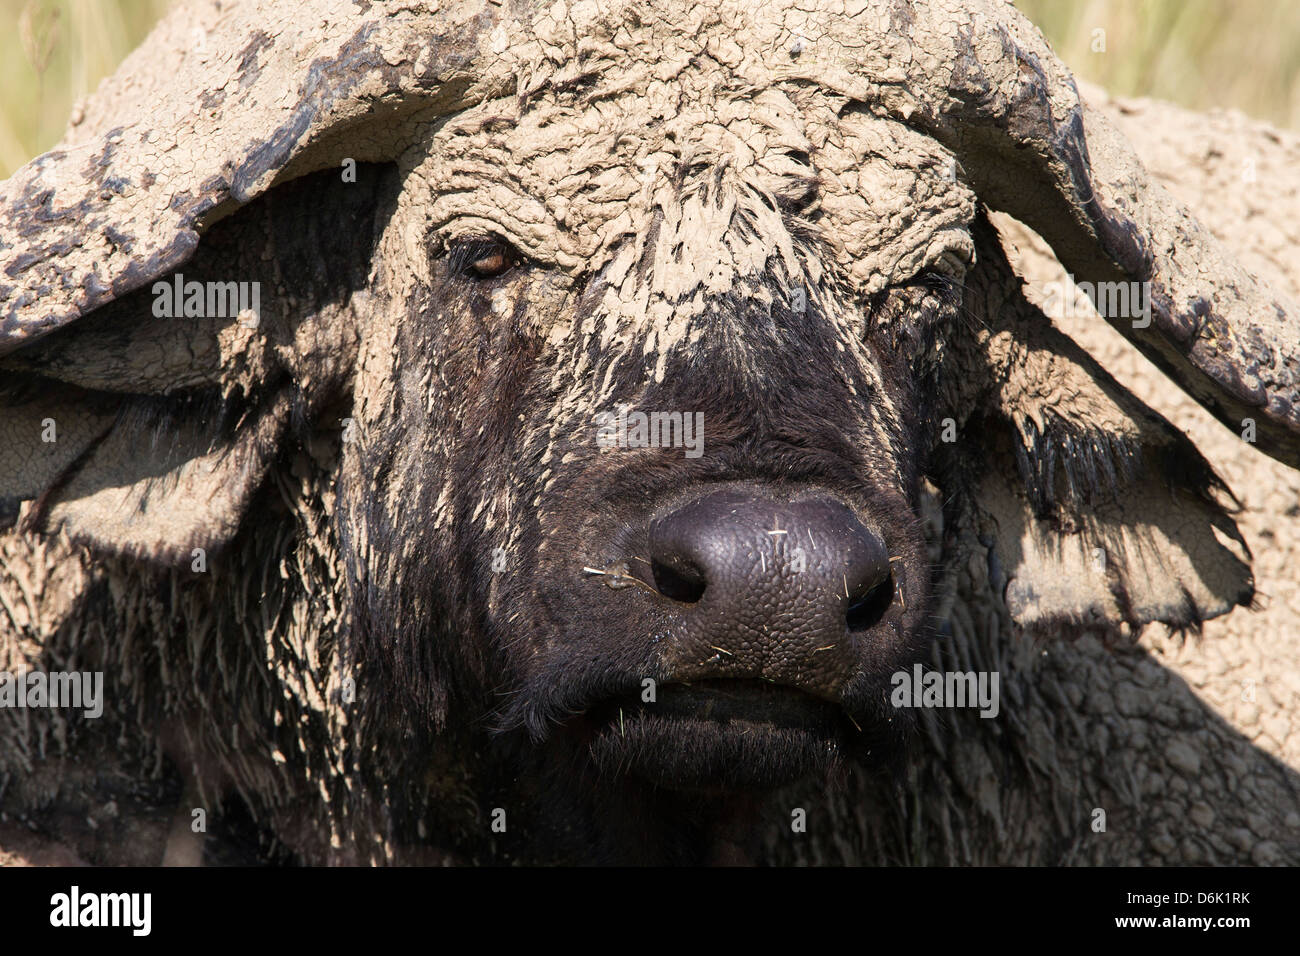 Cape buffalo (Syncerus caffer) with dried mud, Lake Nakuru National Park, Kenya, East Africa, Africa Stock Photo